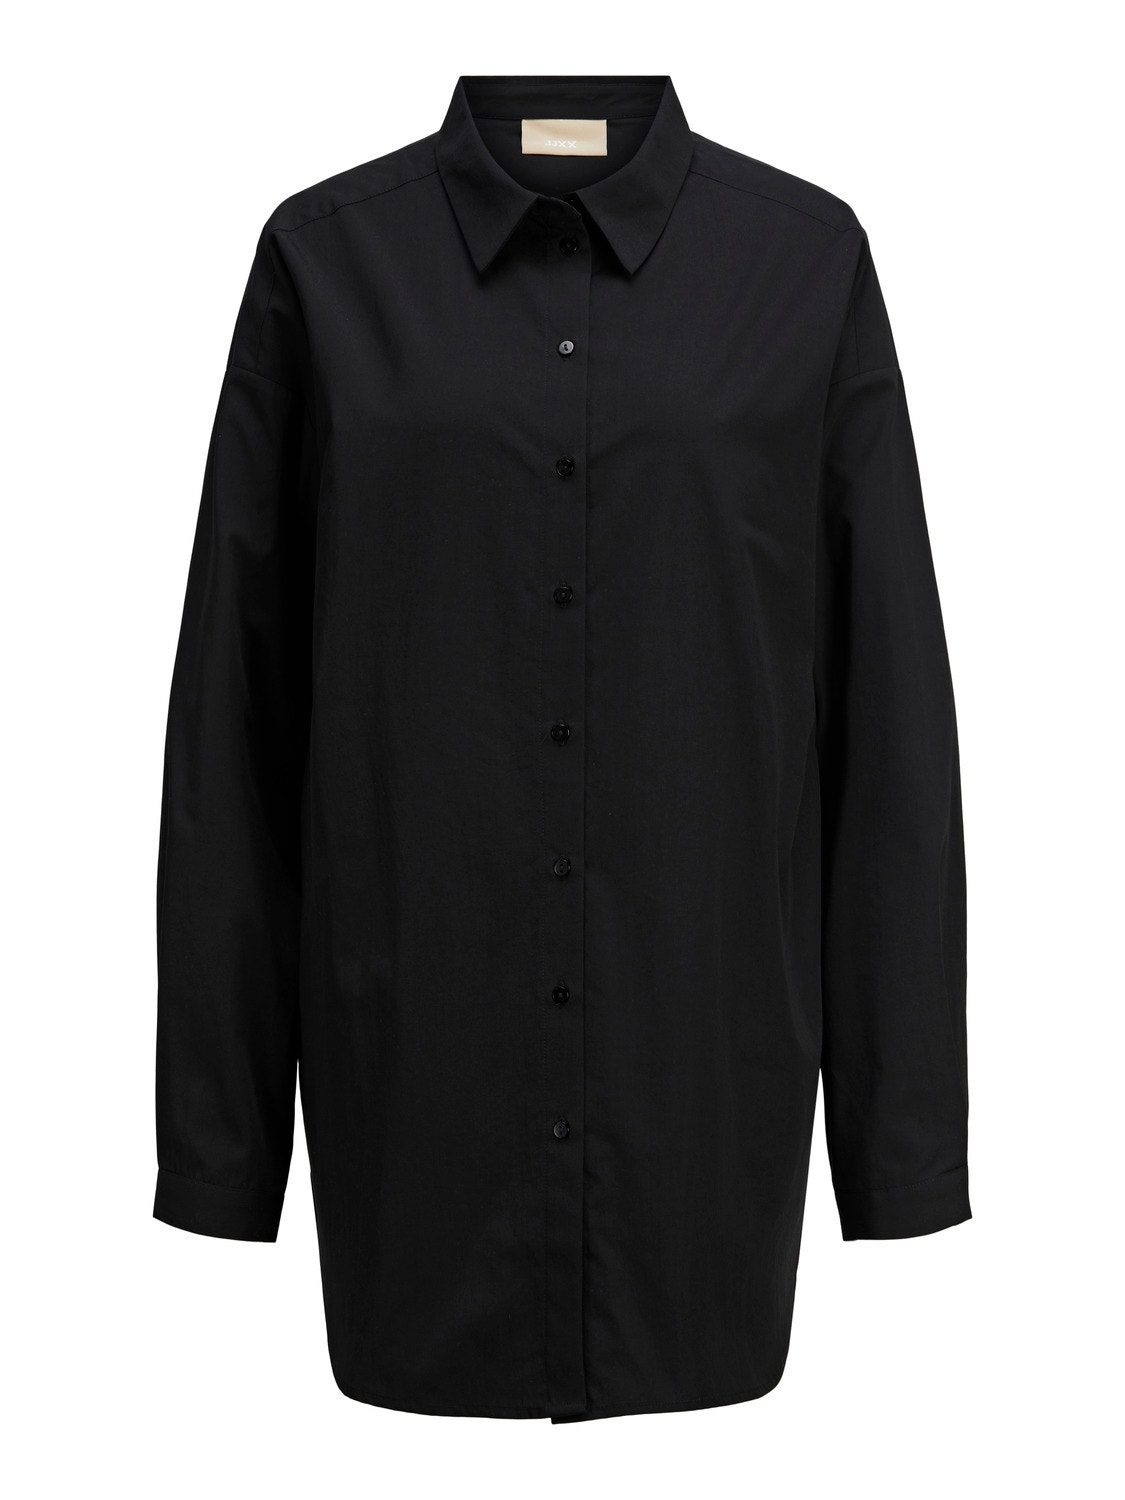 JJXX JXMISSION Poplin-skjorte -Black - 12203891